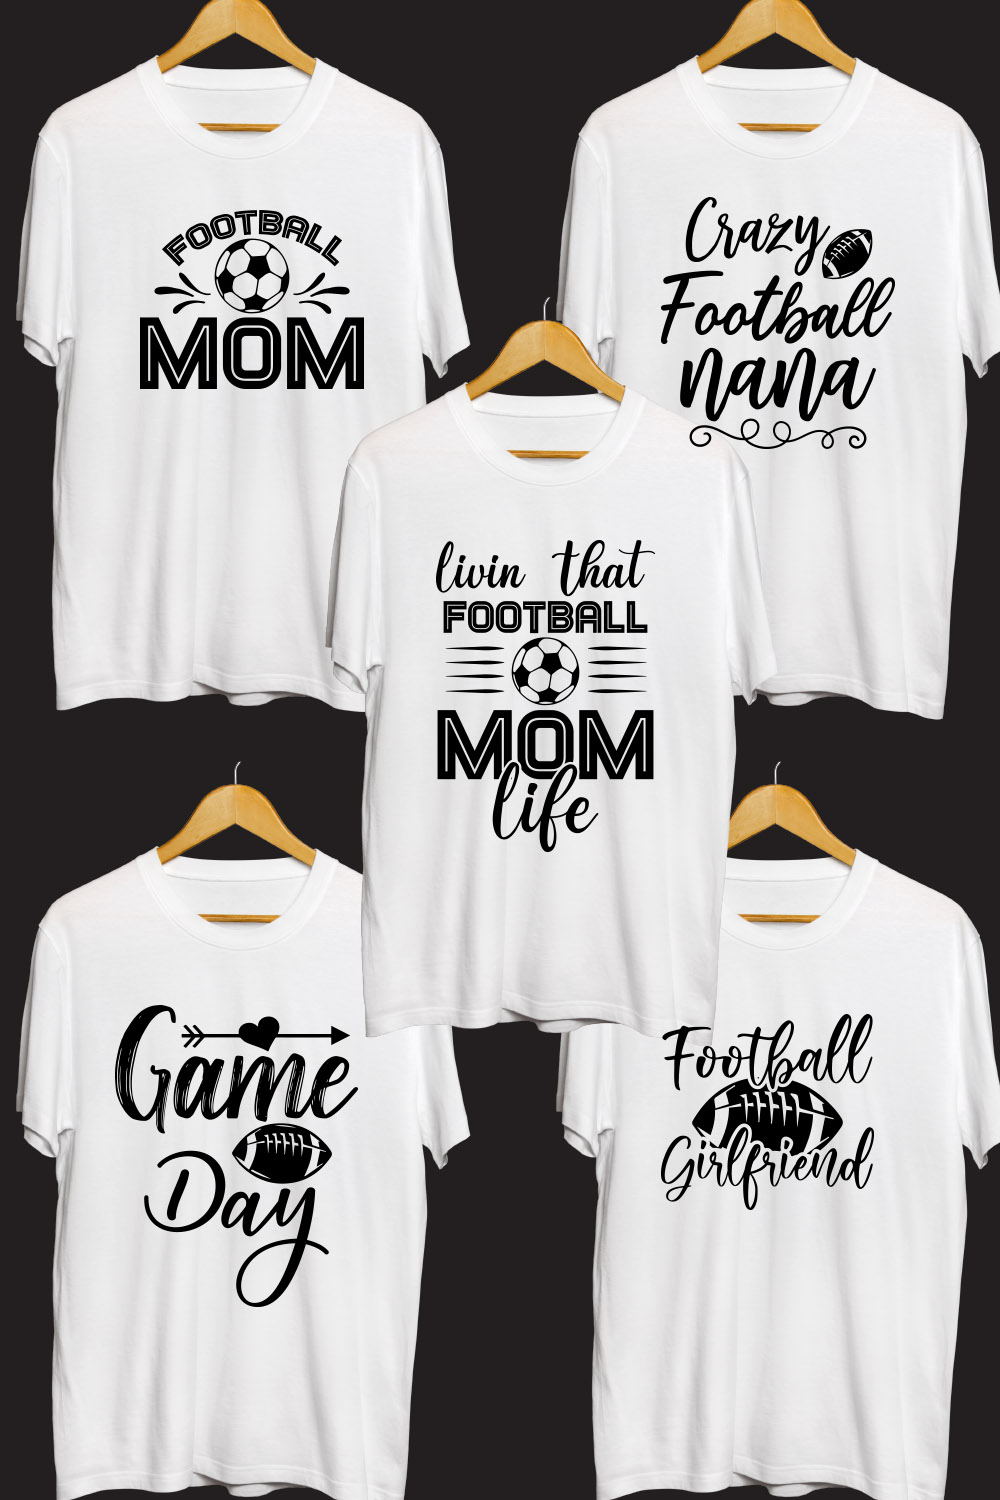 Football SVG T Shirt Designs Bundle pinterest preview image.